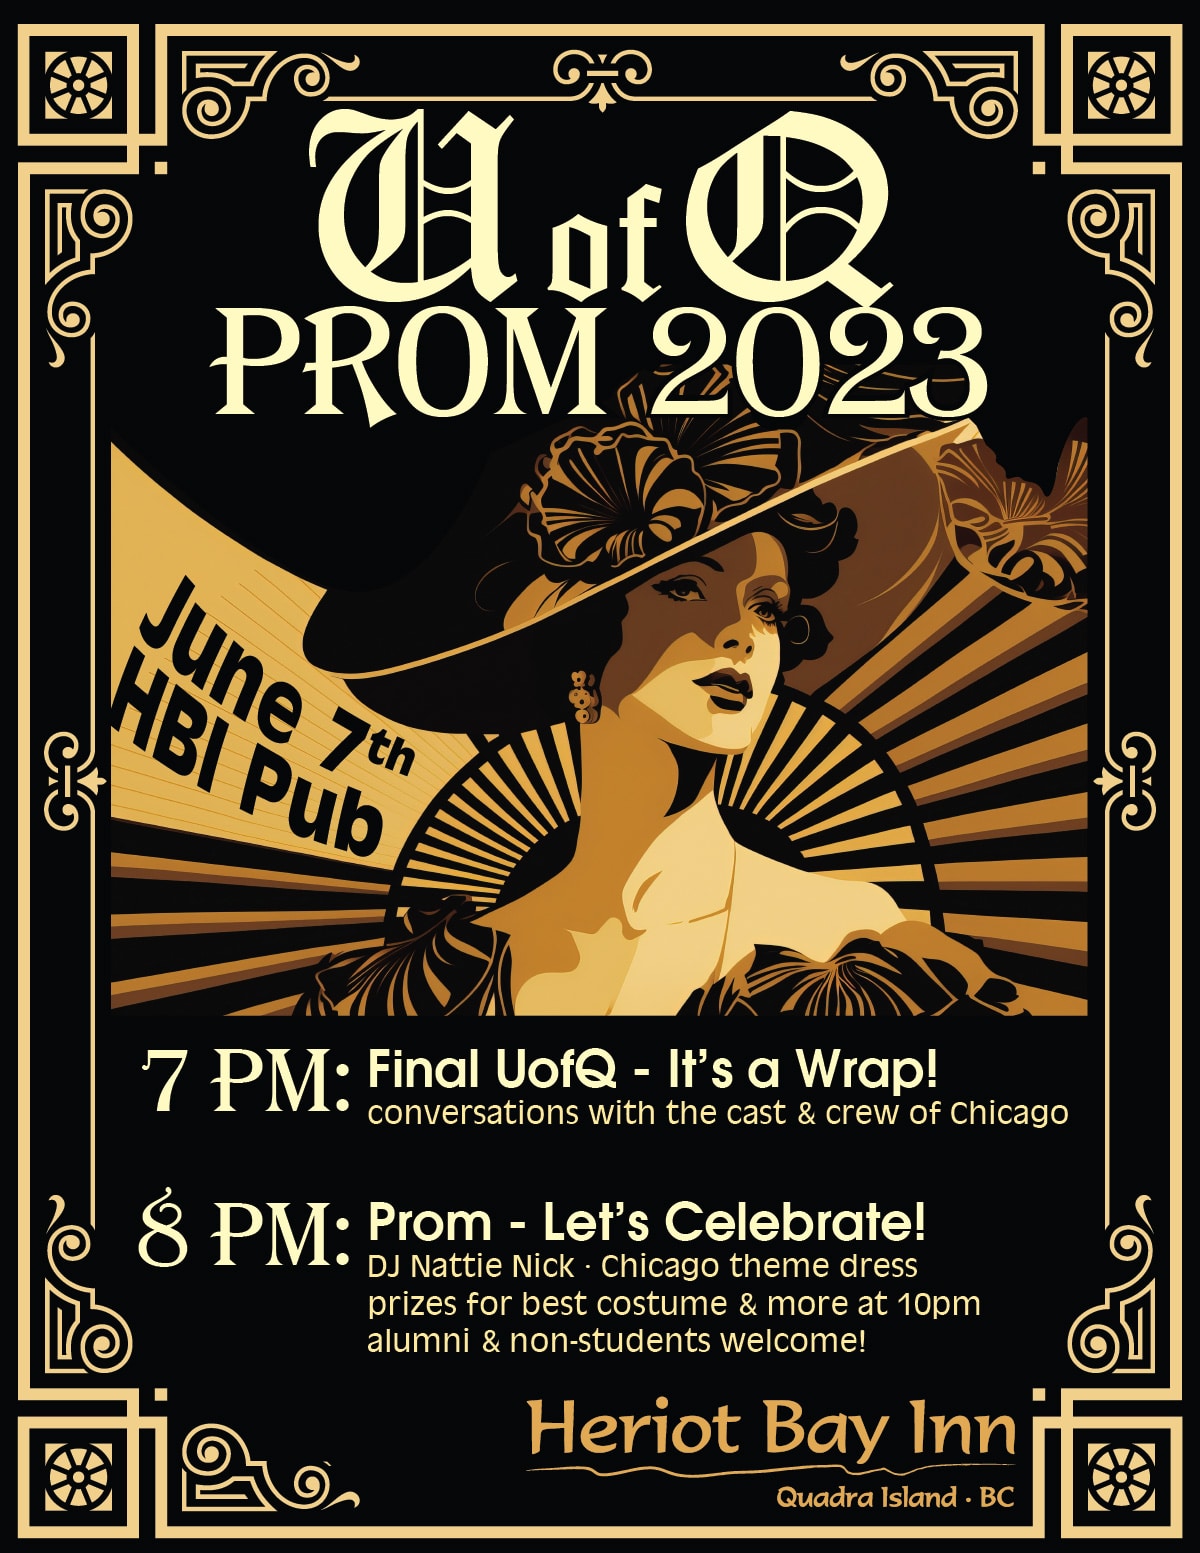 UofQ Prom, 2023 poster